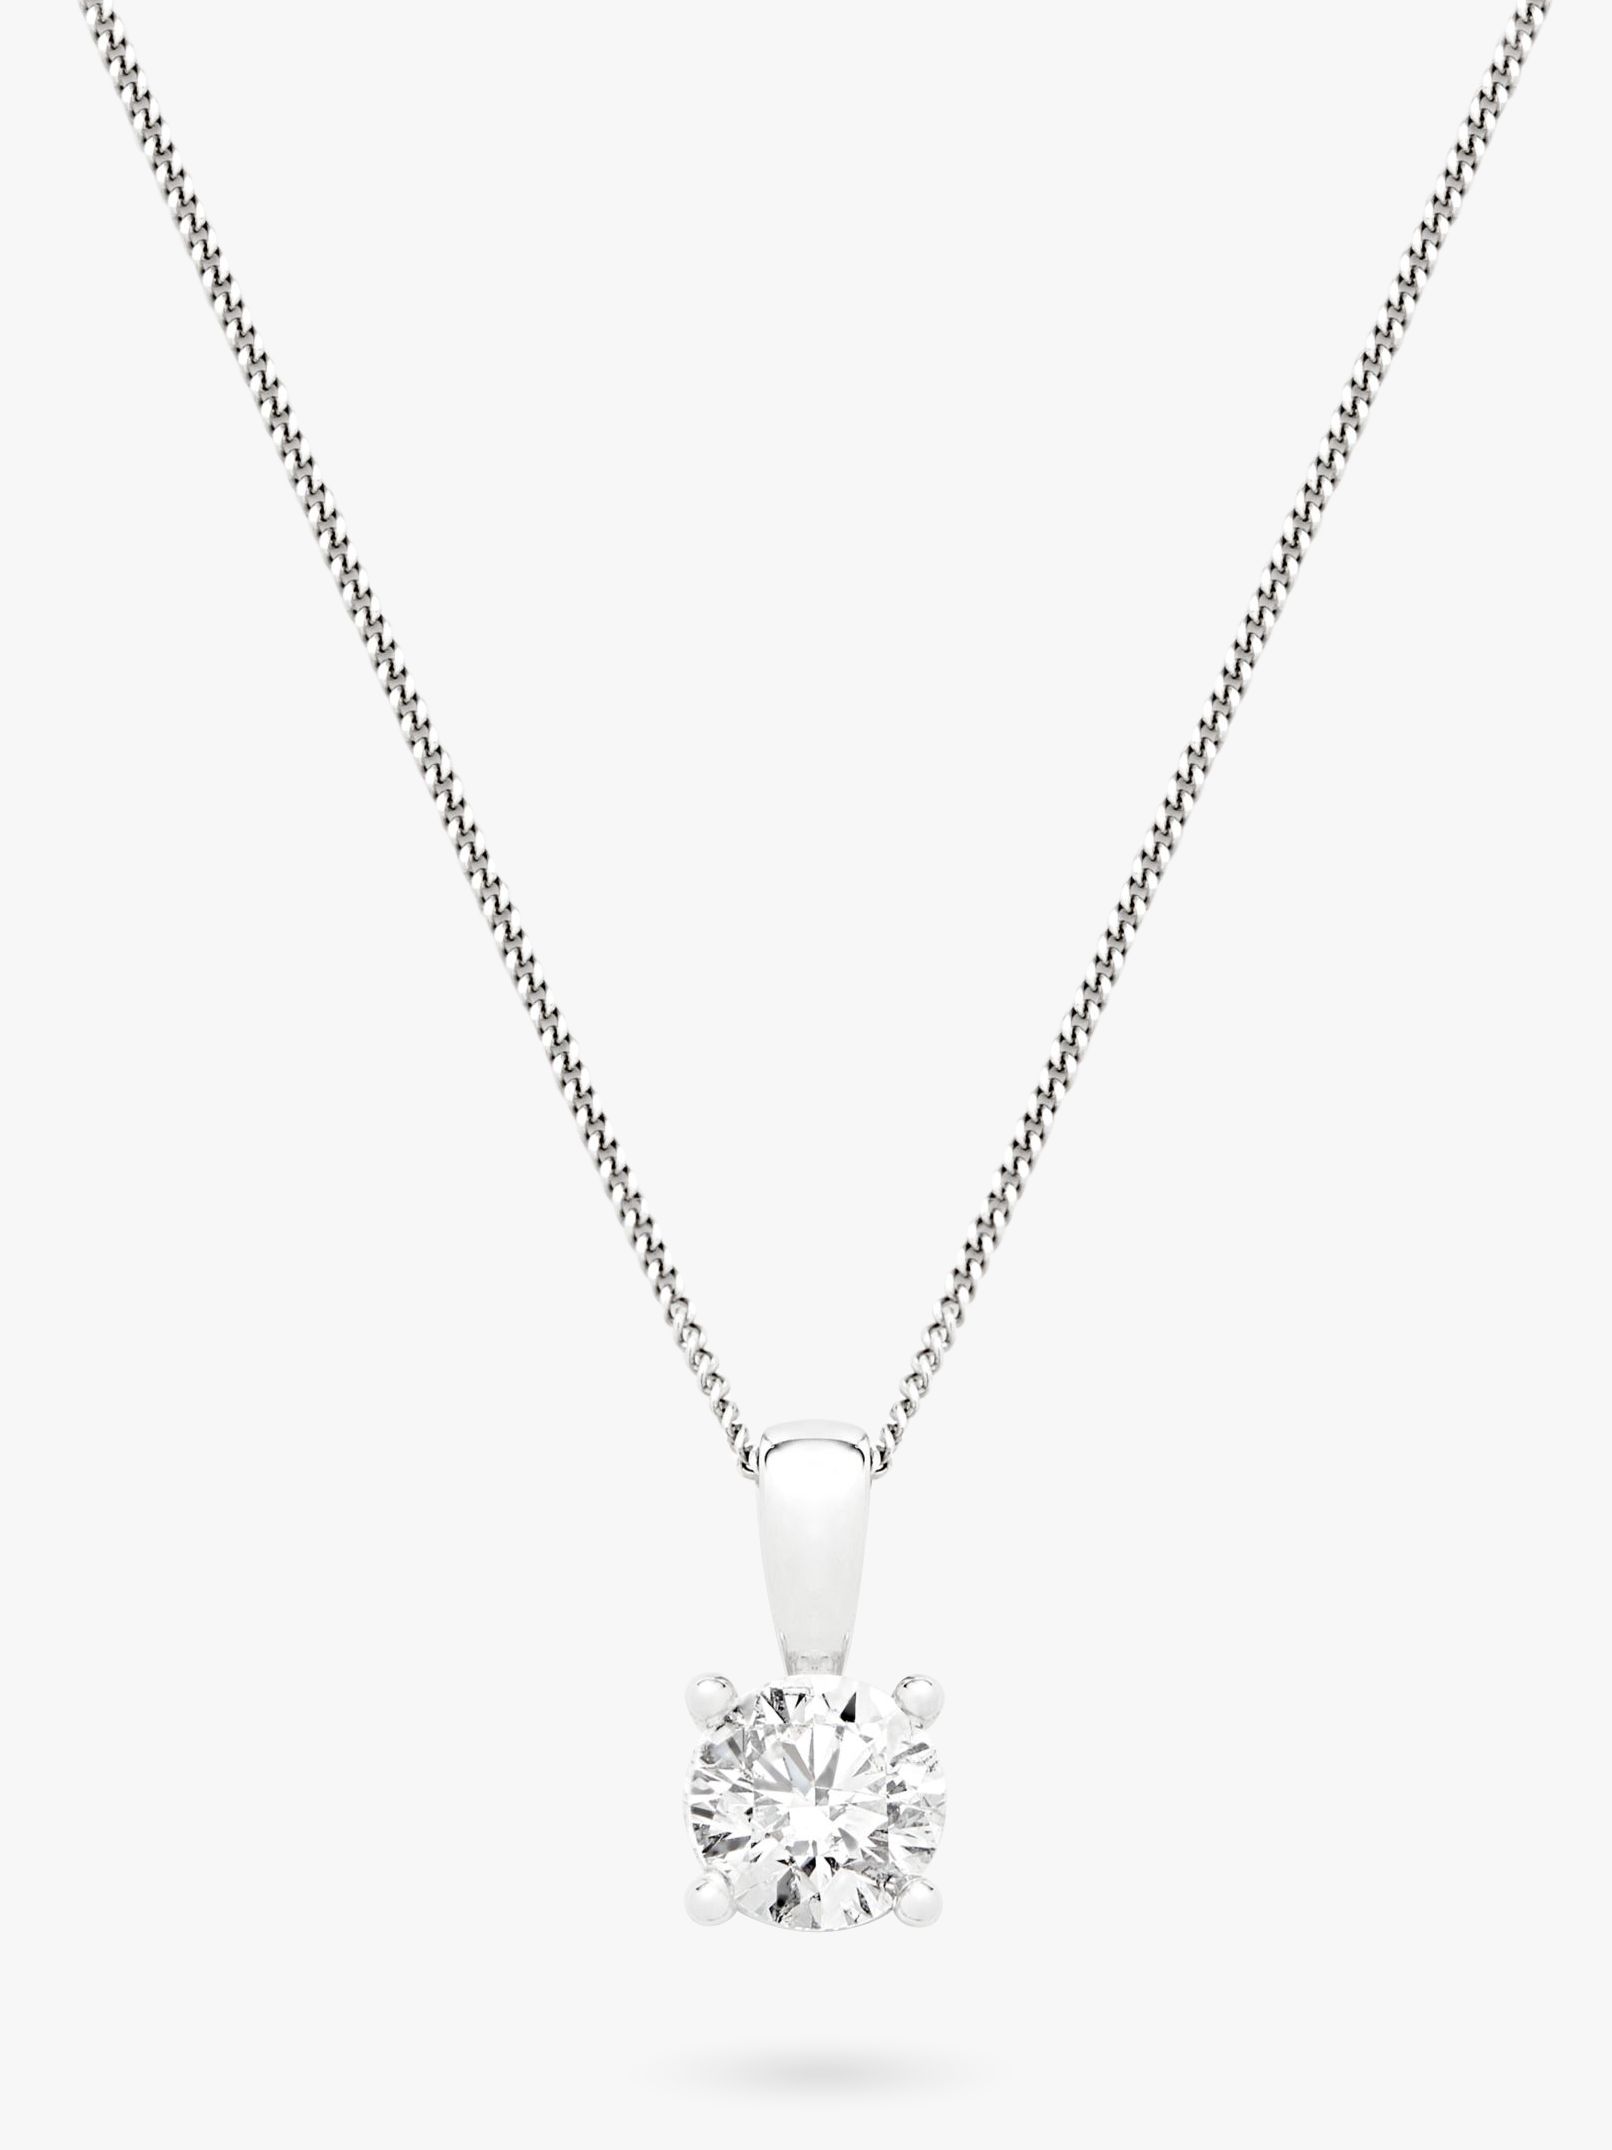 18ct White Gold Diamond Necklace